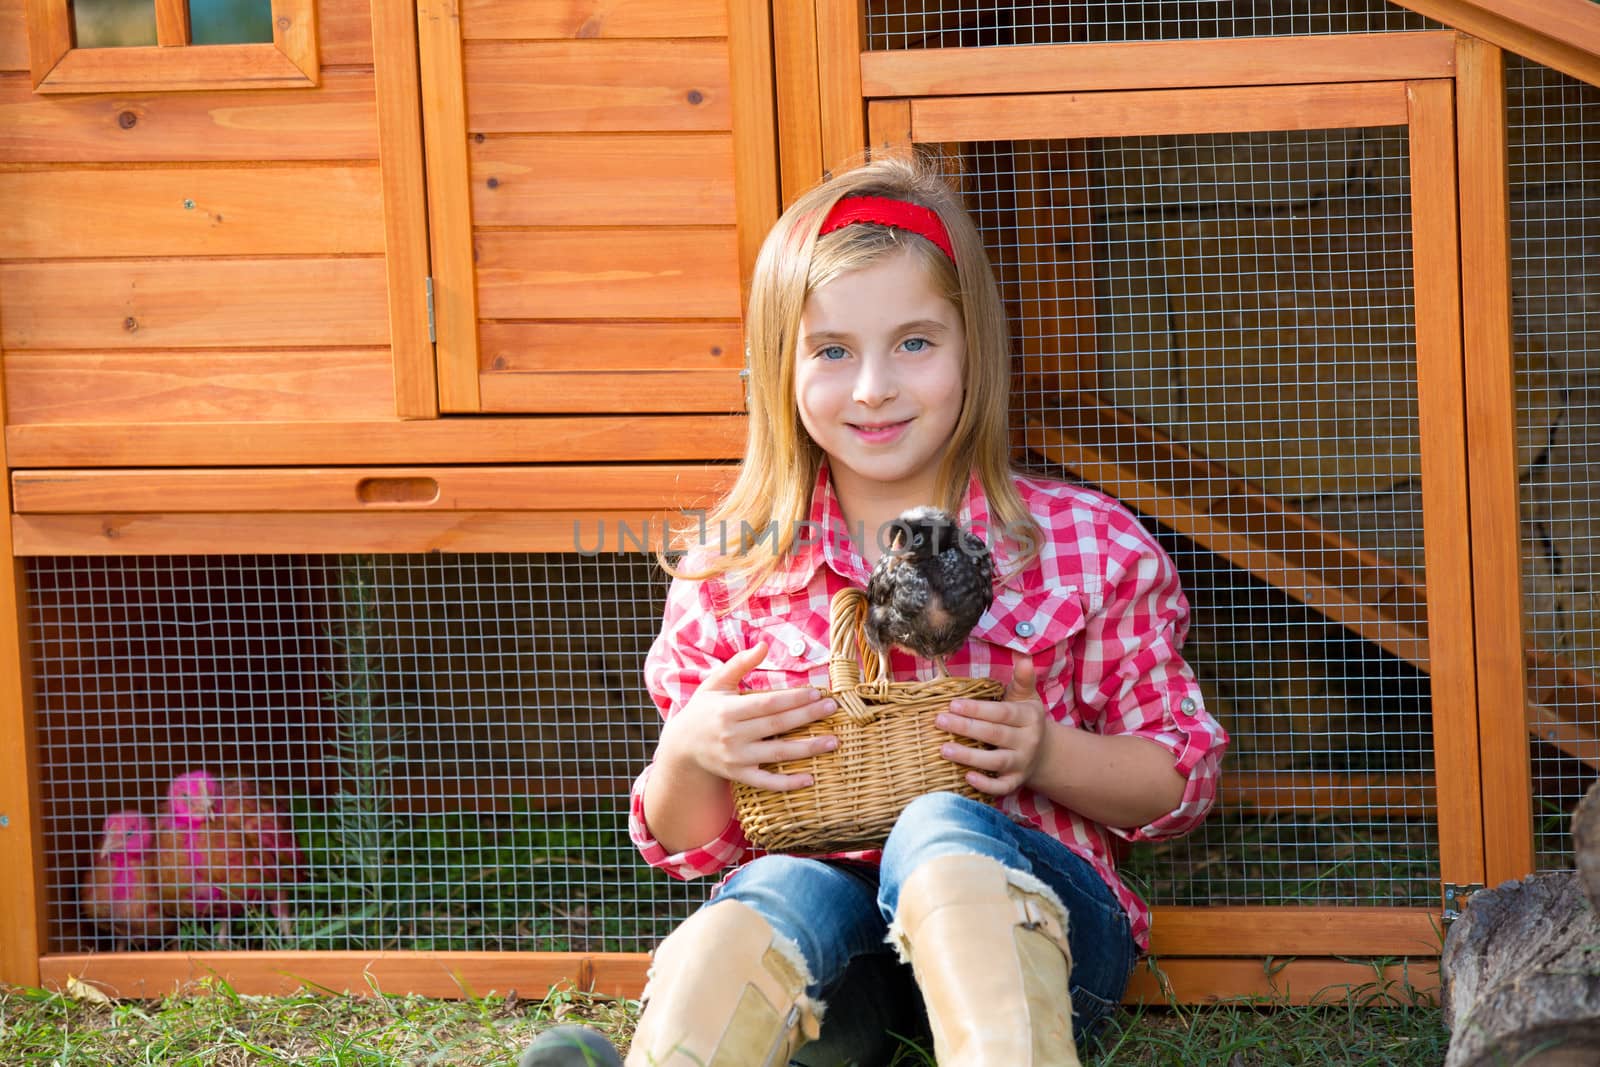 breeder hens kid girl rancher blond farmer playing with chicks in chicken hencoop